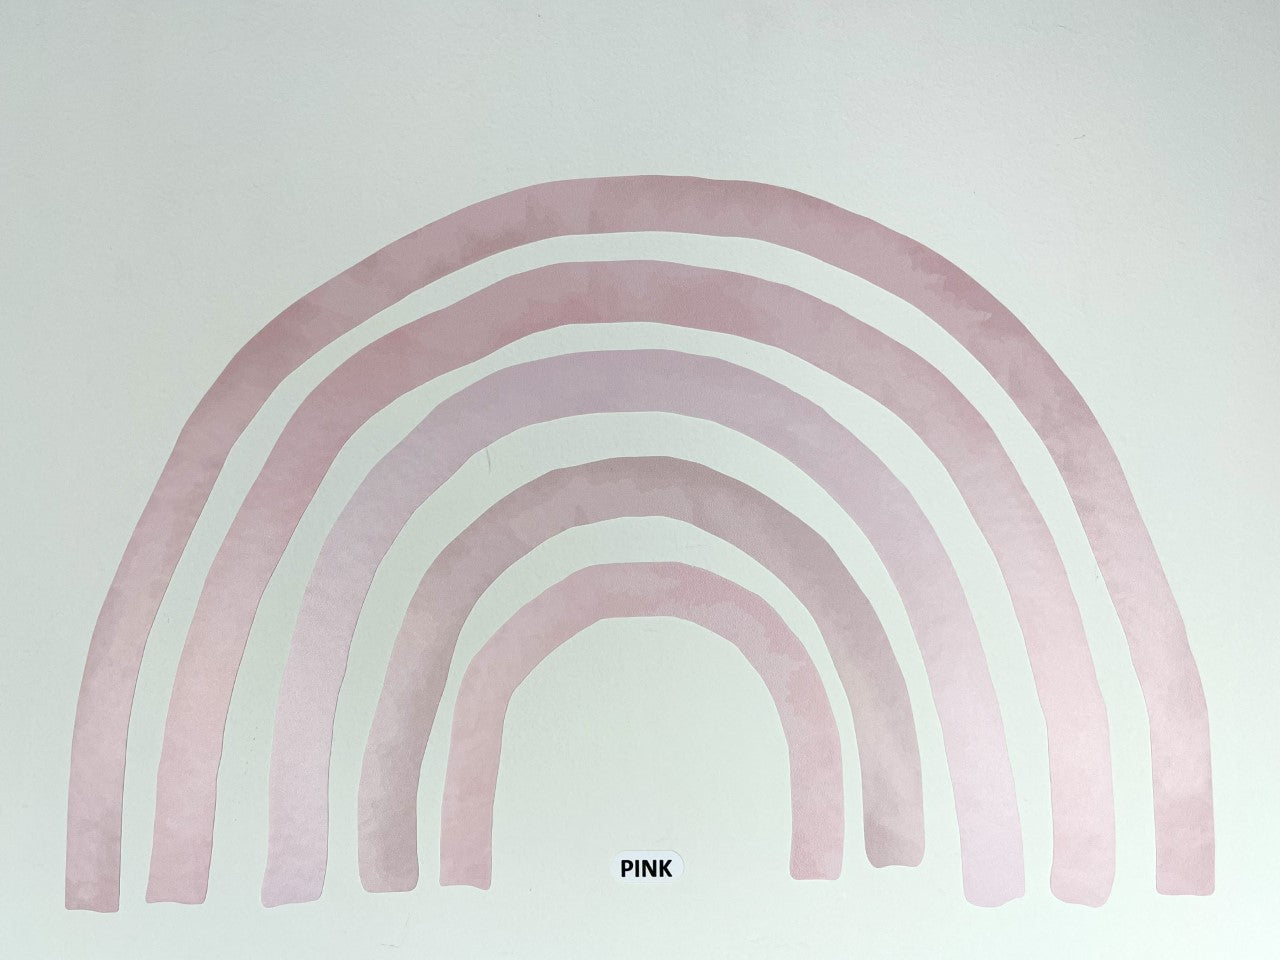 Swatch image of Pink rainbow